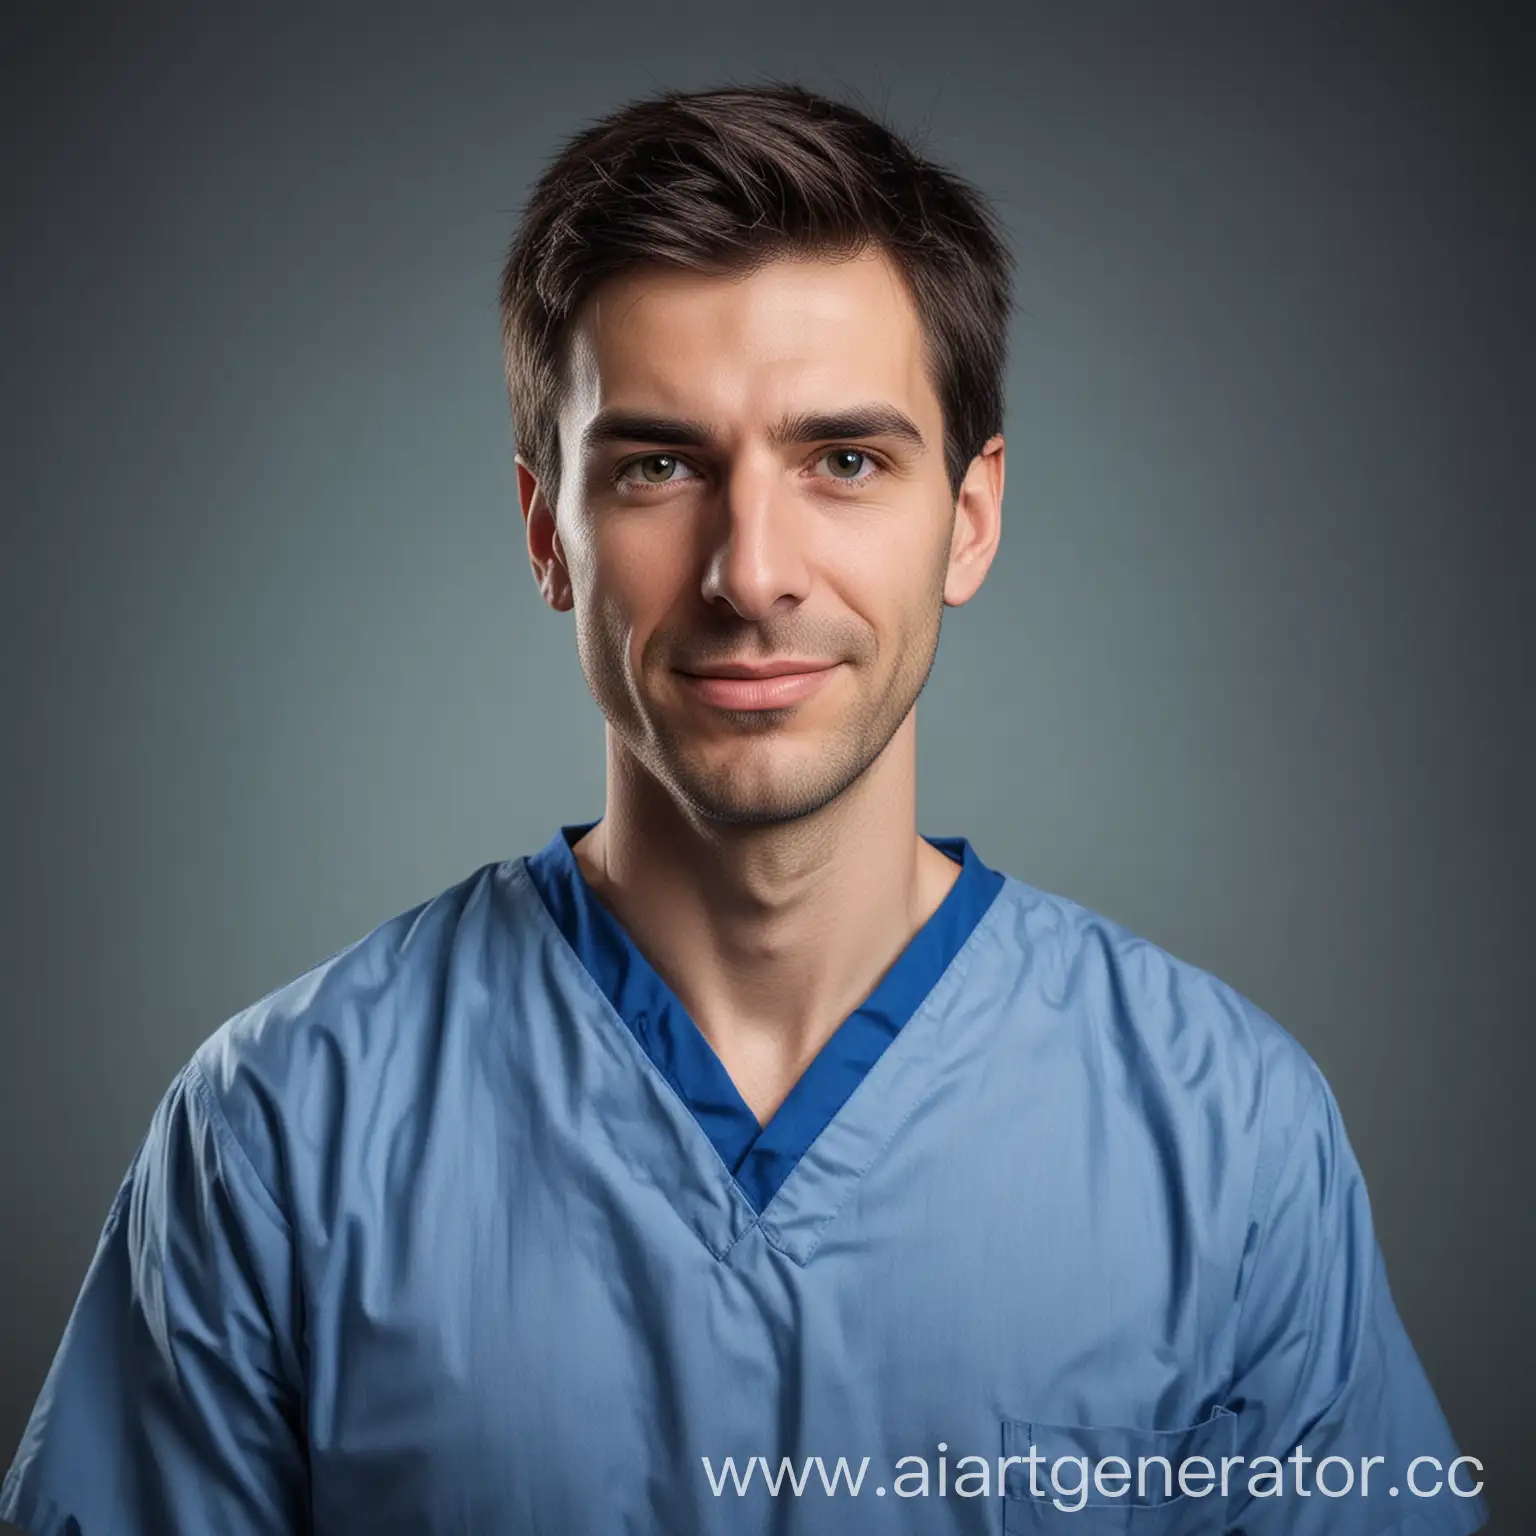 Professional-Male-Dentist-in-Blue-Medical-Attire-Portrait